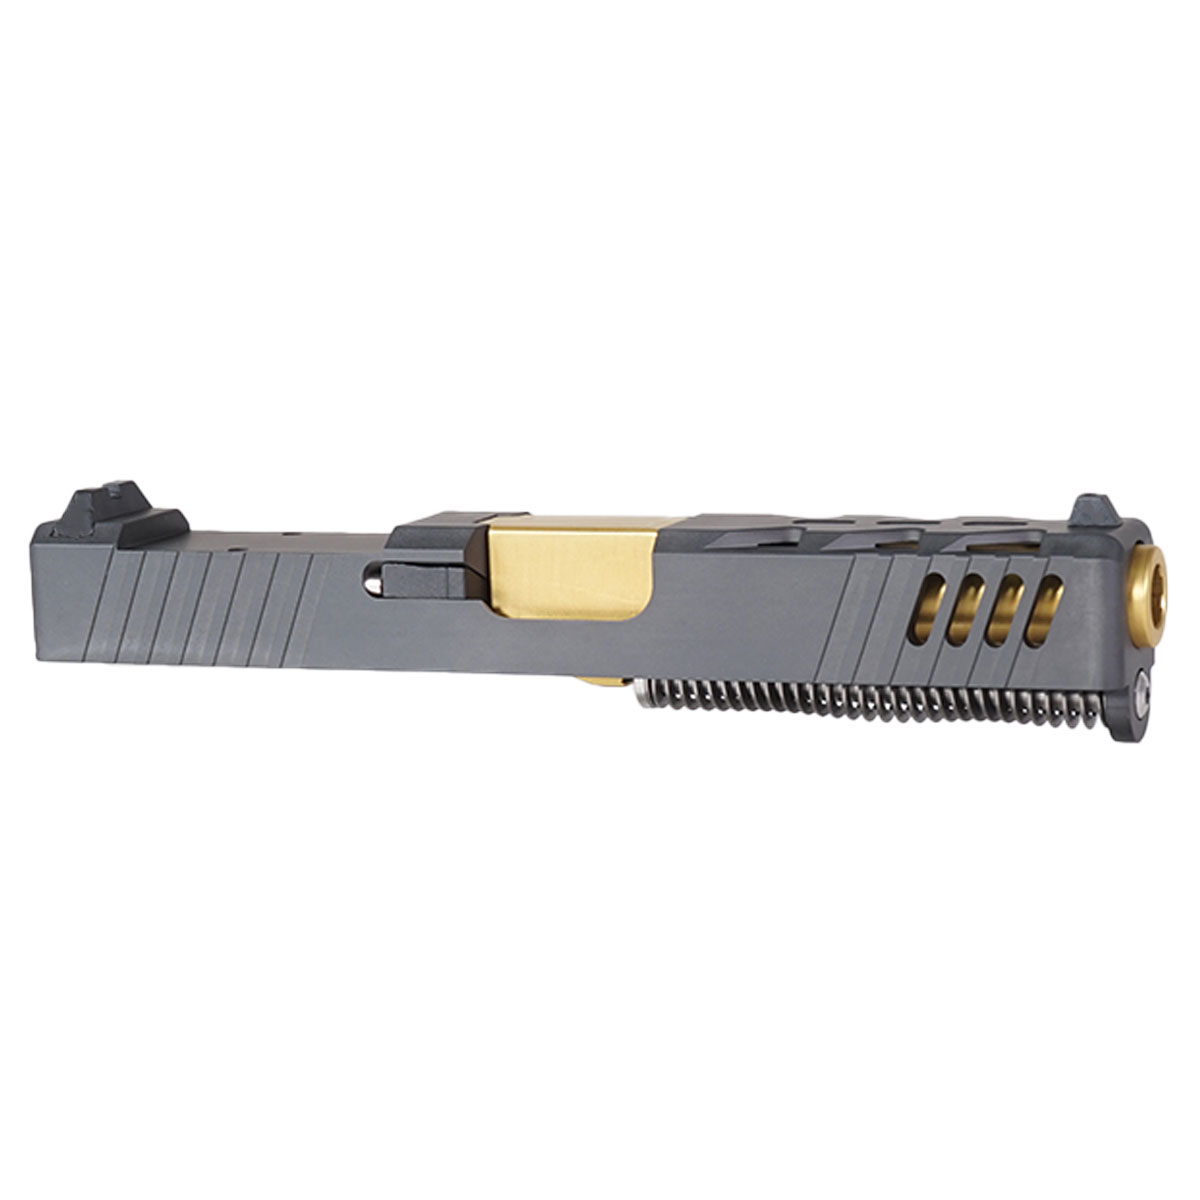 OTD 'High Ground' 9mm Complete Slide Kit - Glock 19 Gen 1-3 Compatible